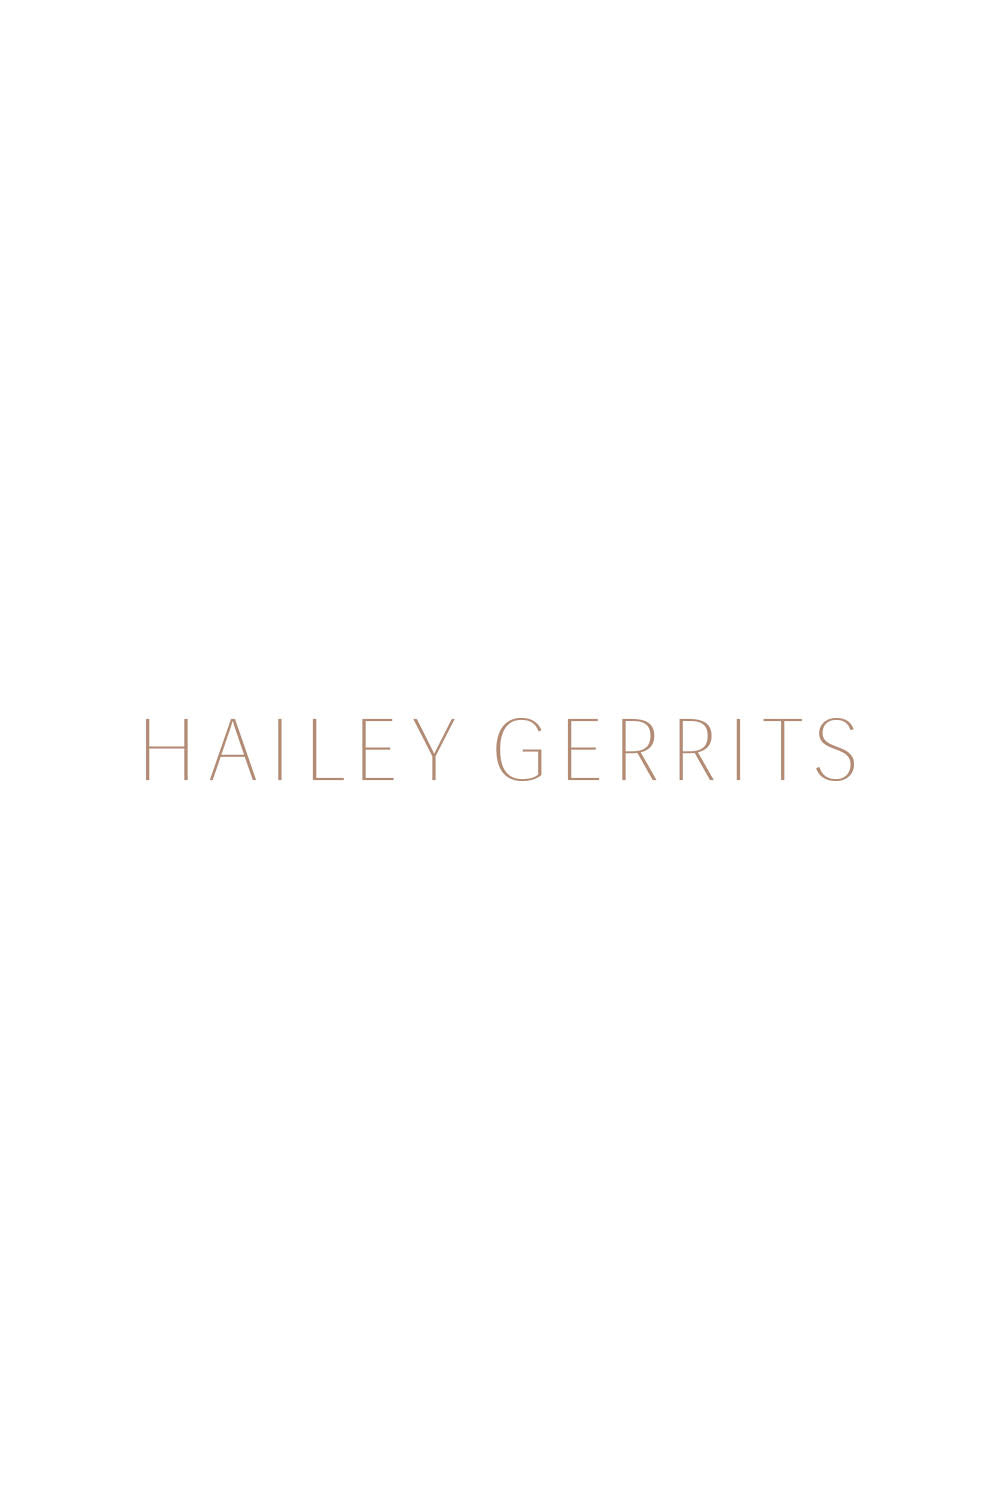 Hailey Gerrits